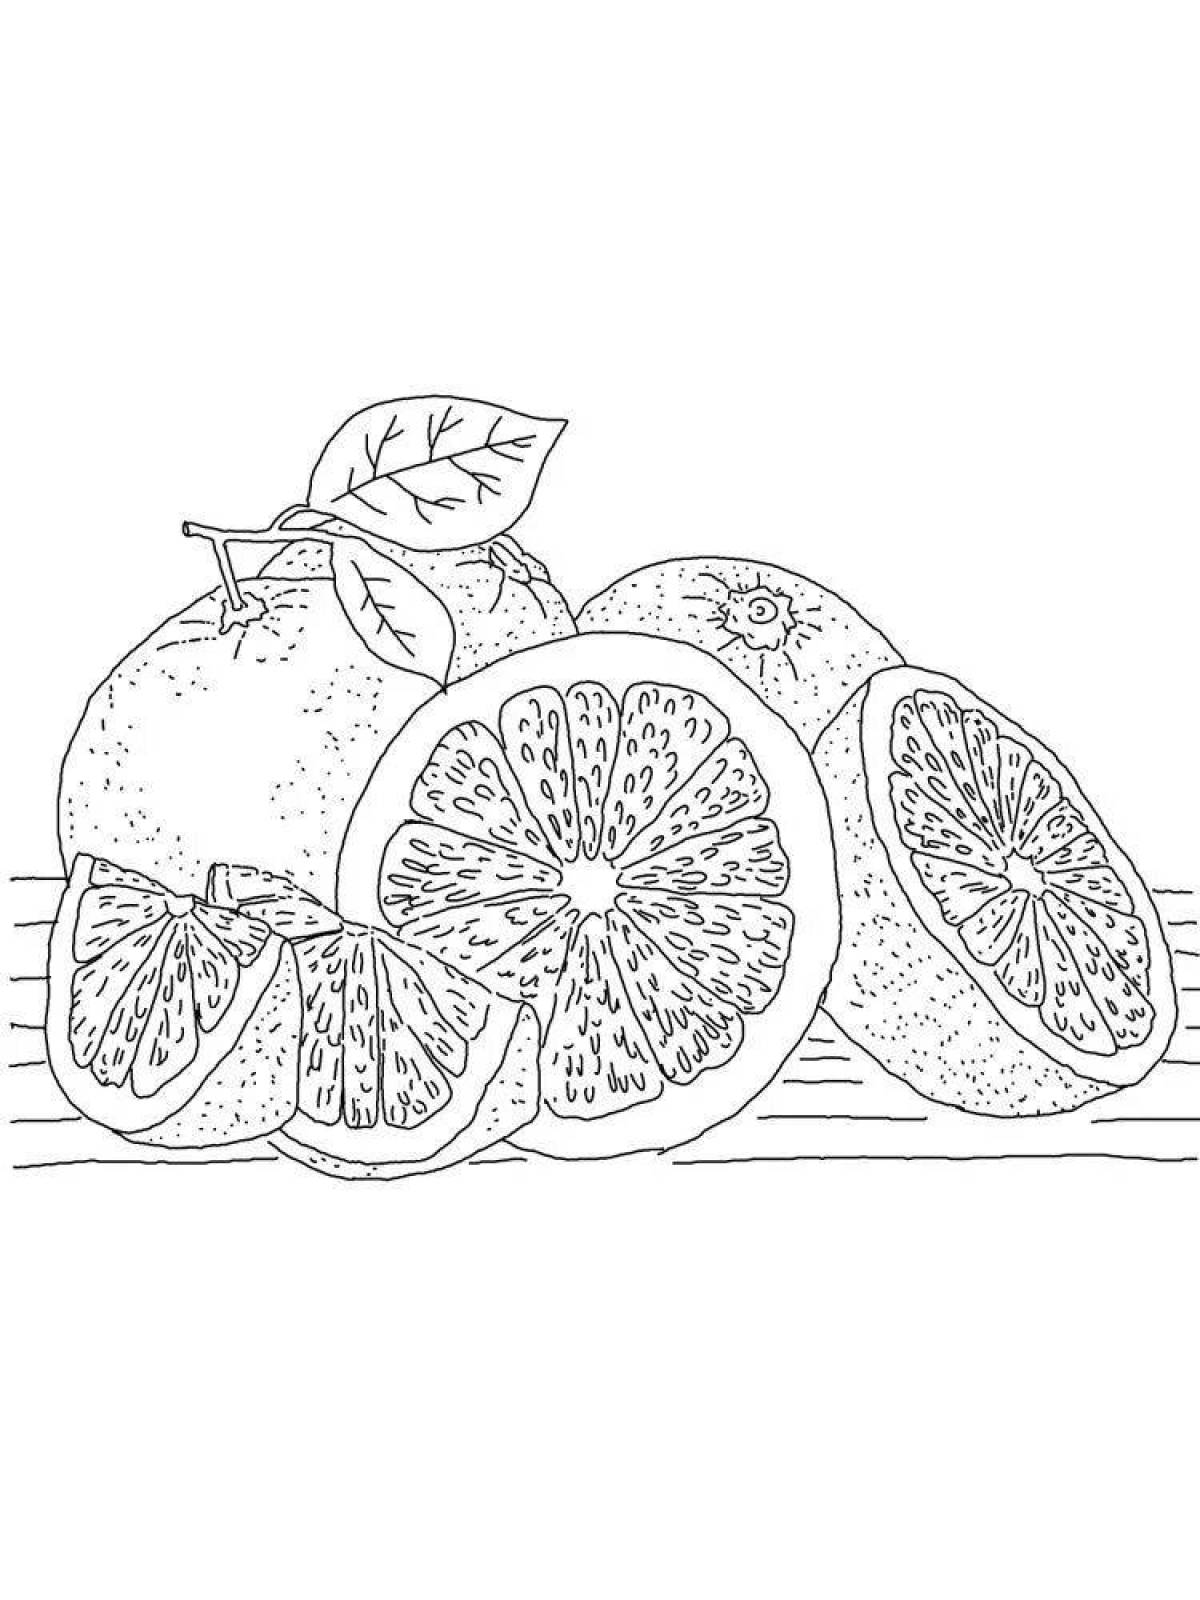 Grapefruit live coloring page